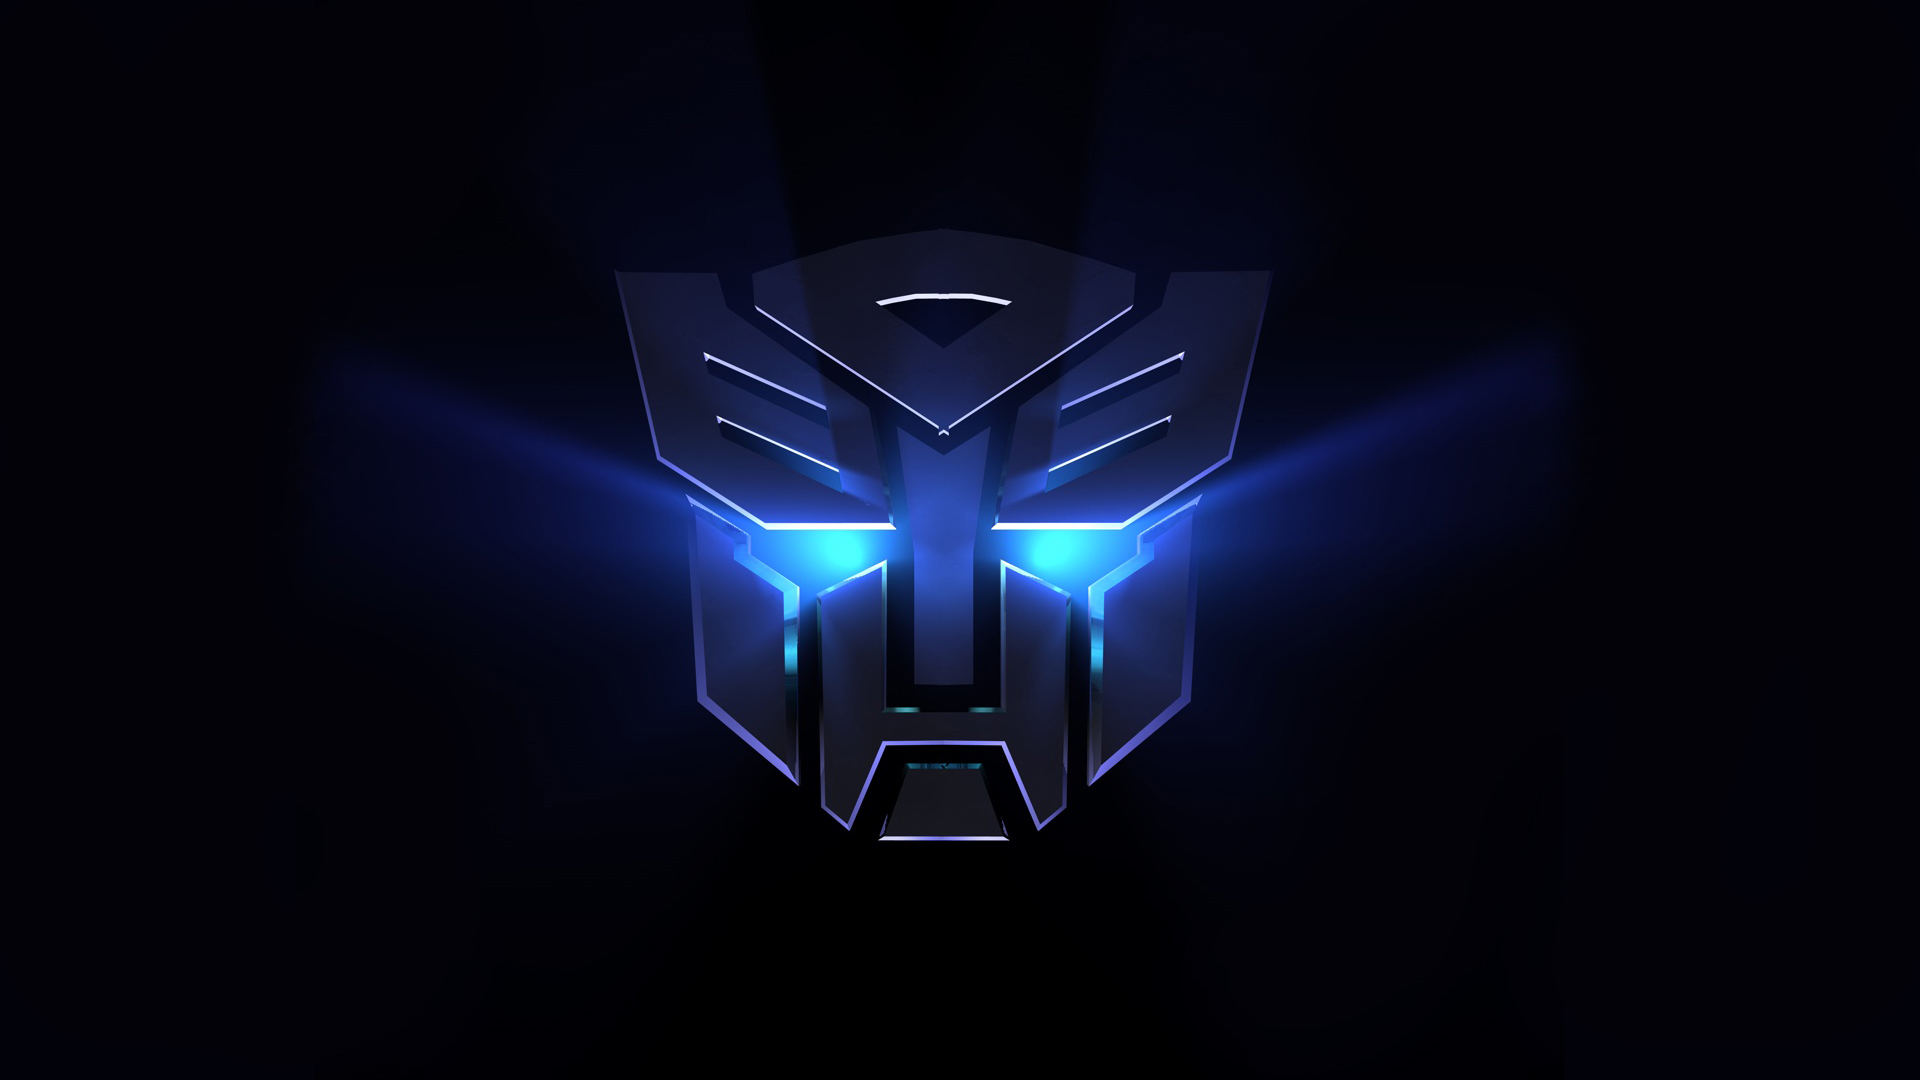 Descarga gratuita de fondo de pantalla para móvil de Transformers, Películas.